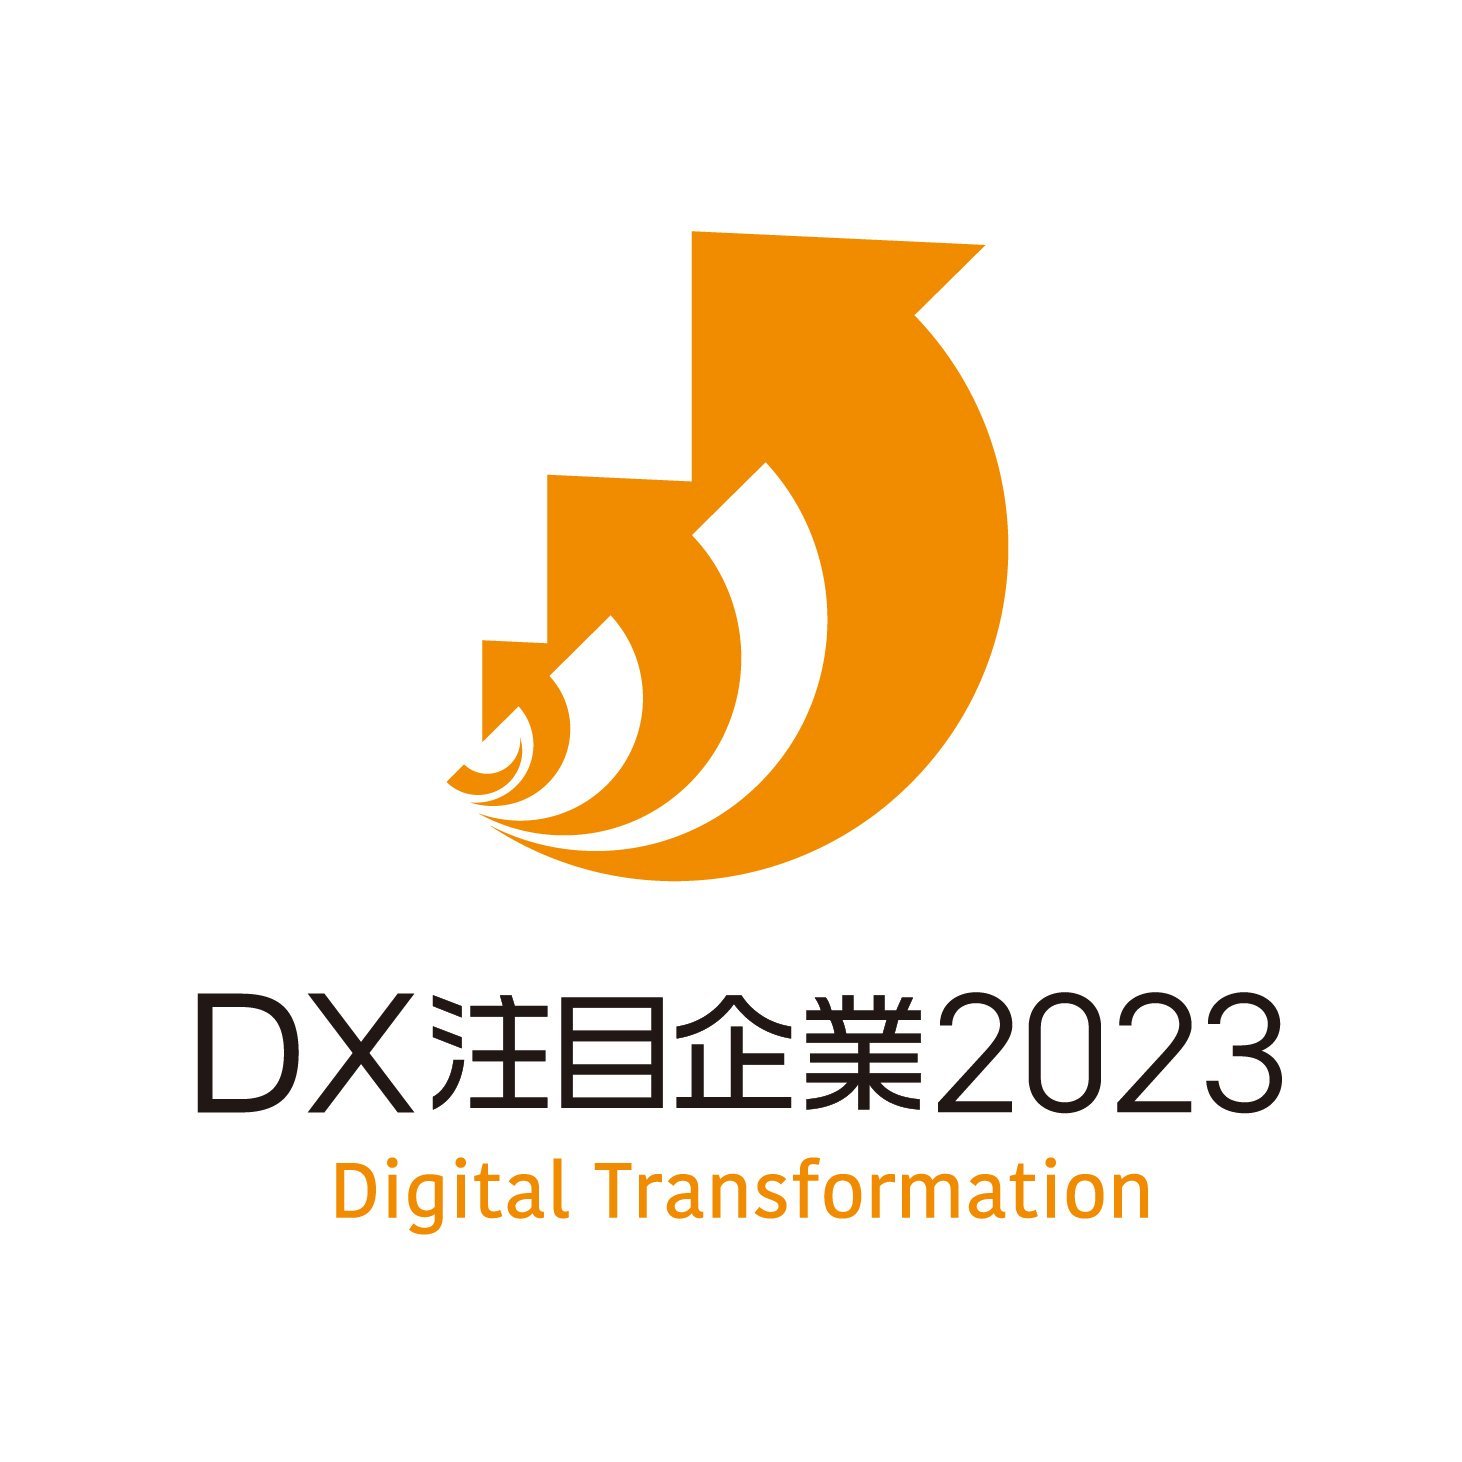 Noteworthy DX Companies 2023